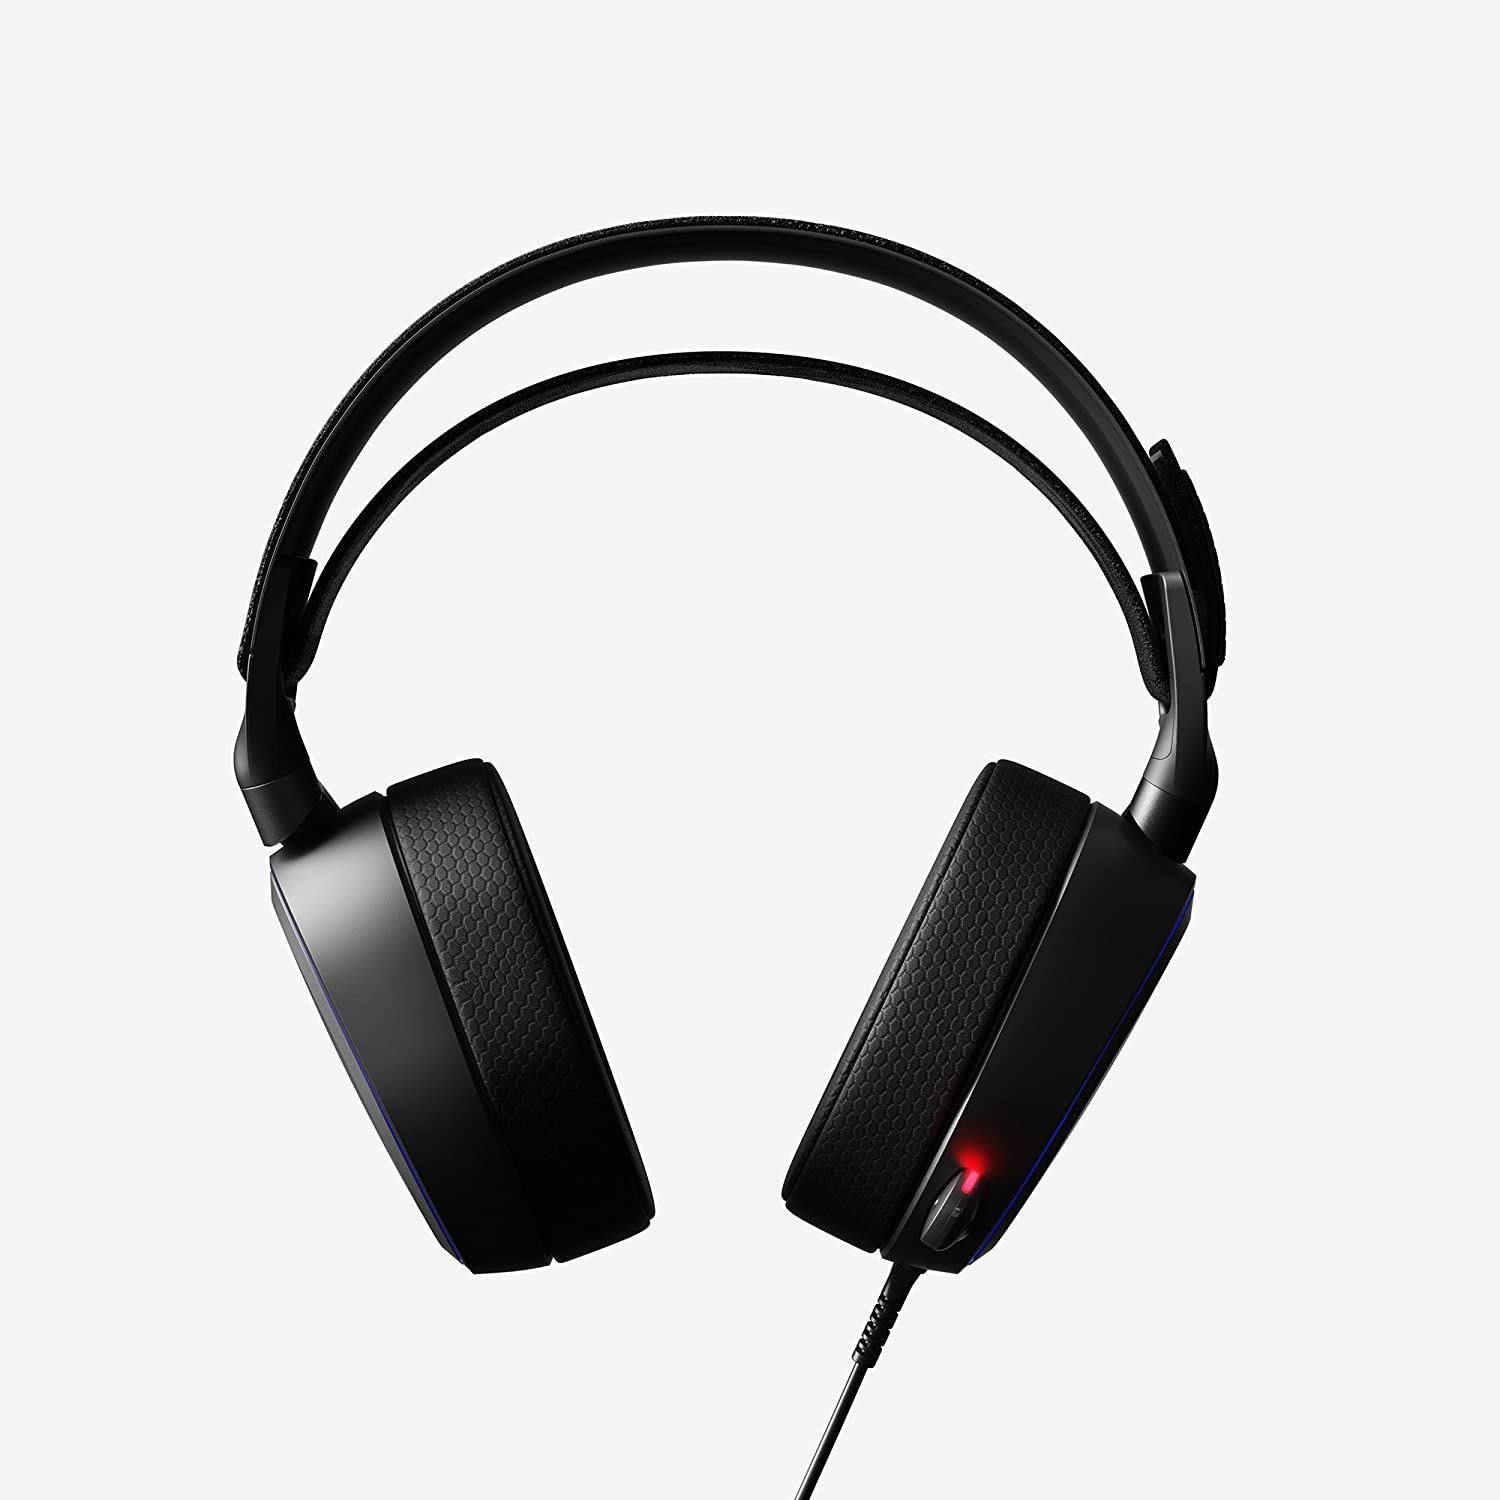 SteelSeries Arctis Pro headset